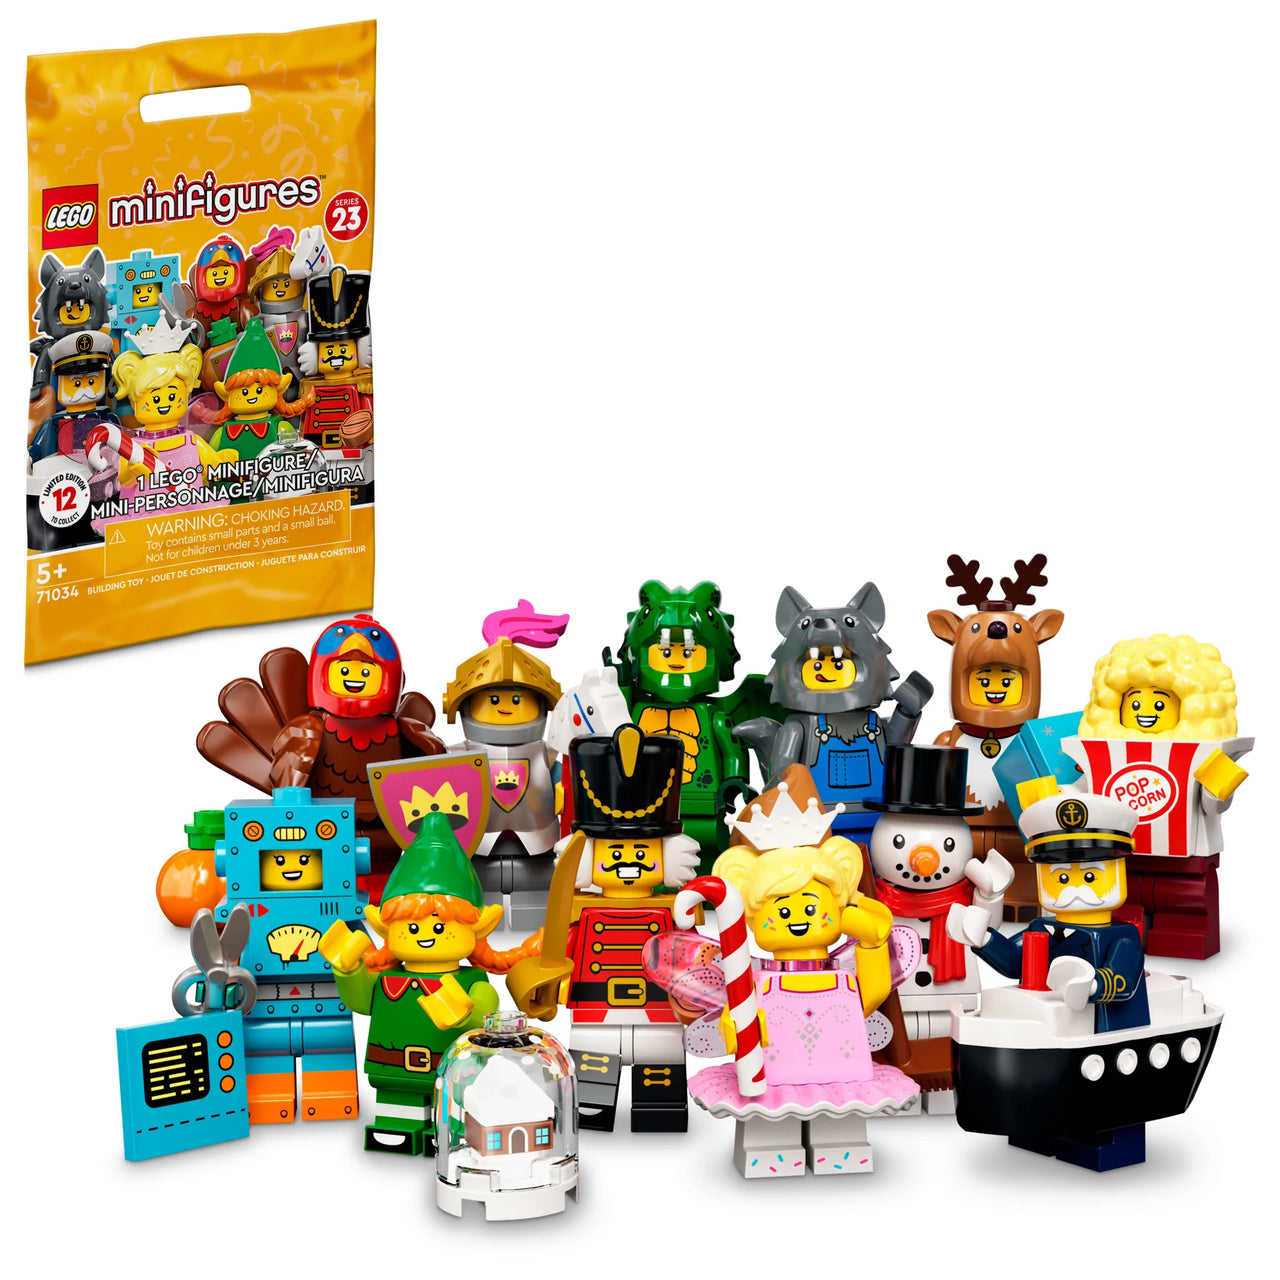 LEGO Minifigures: Classic Minifigures Series 23  (71034-36)